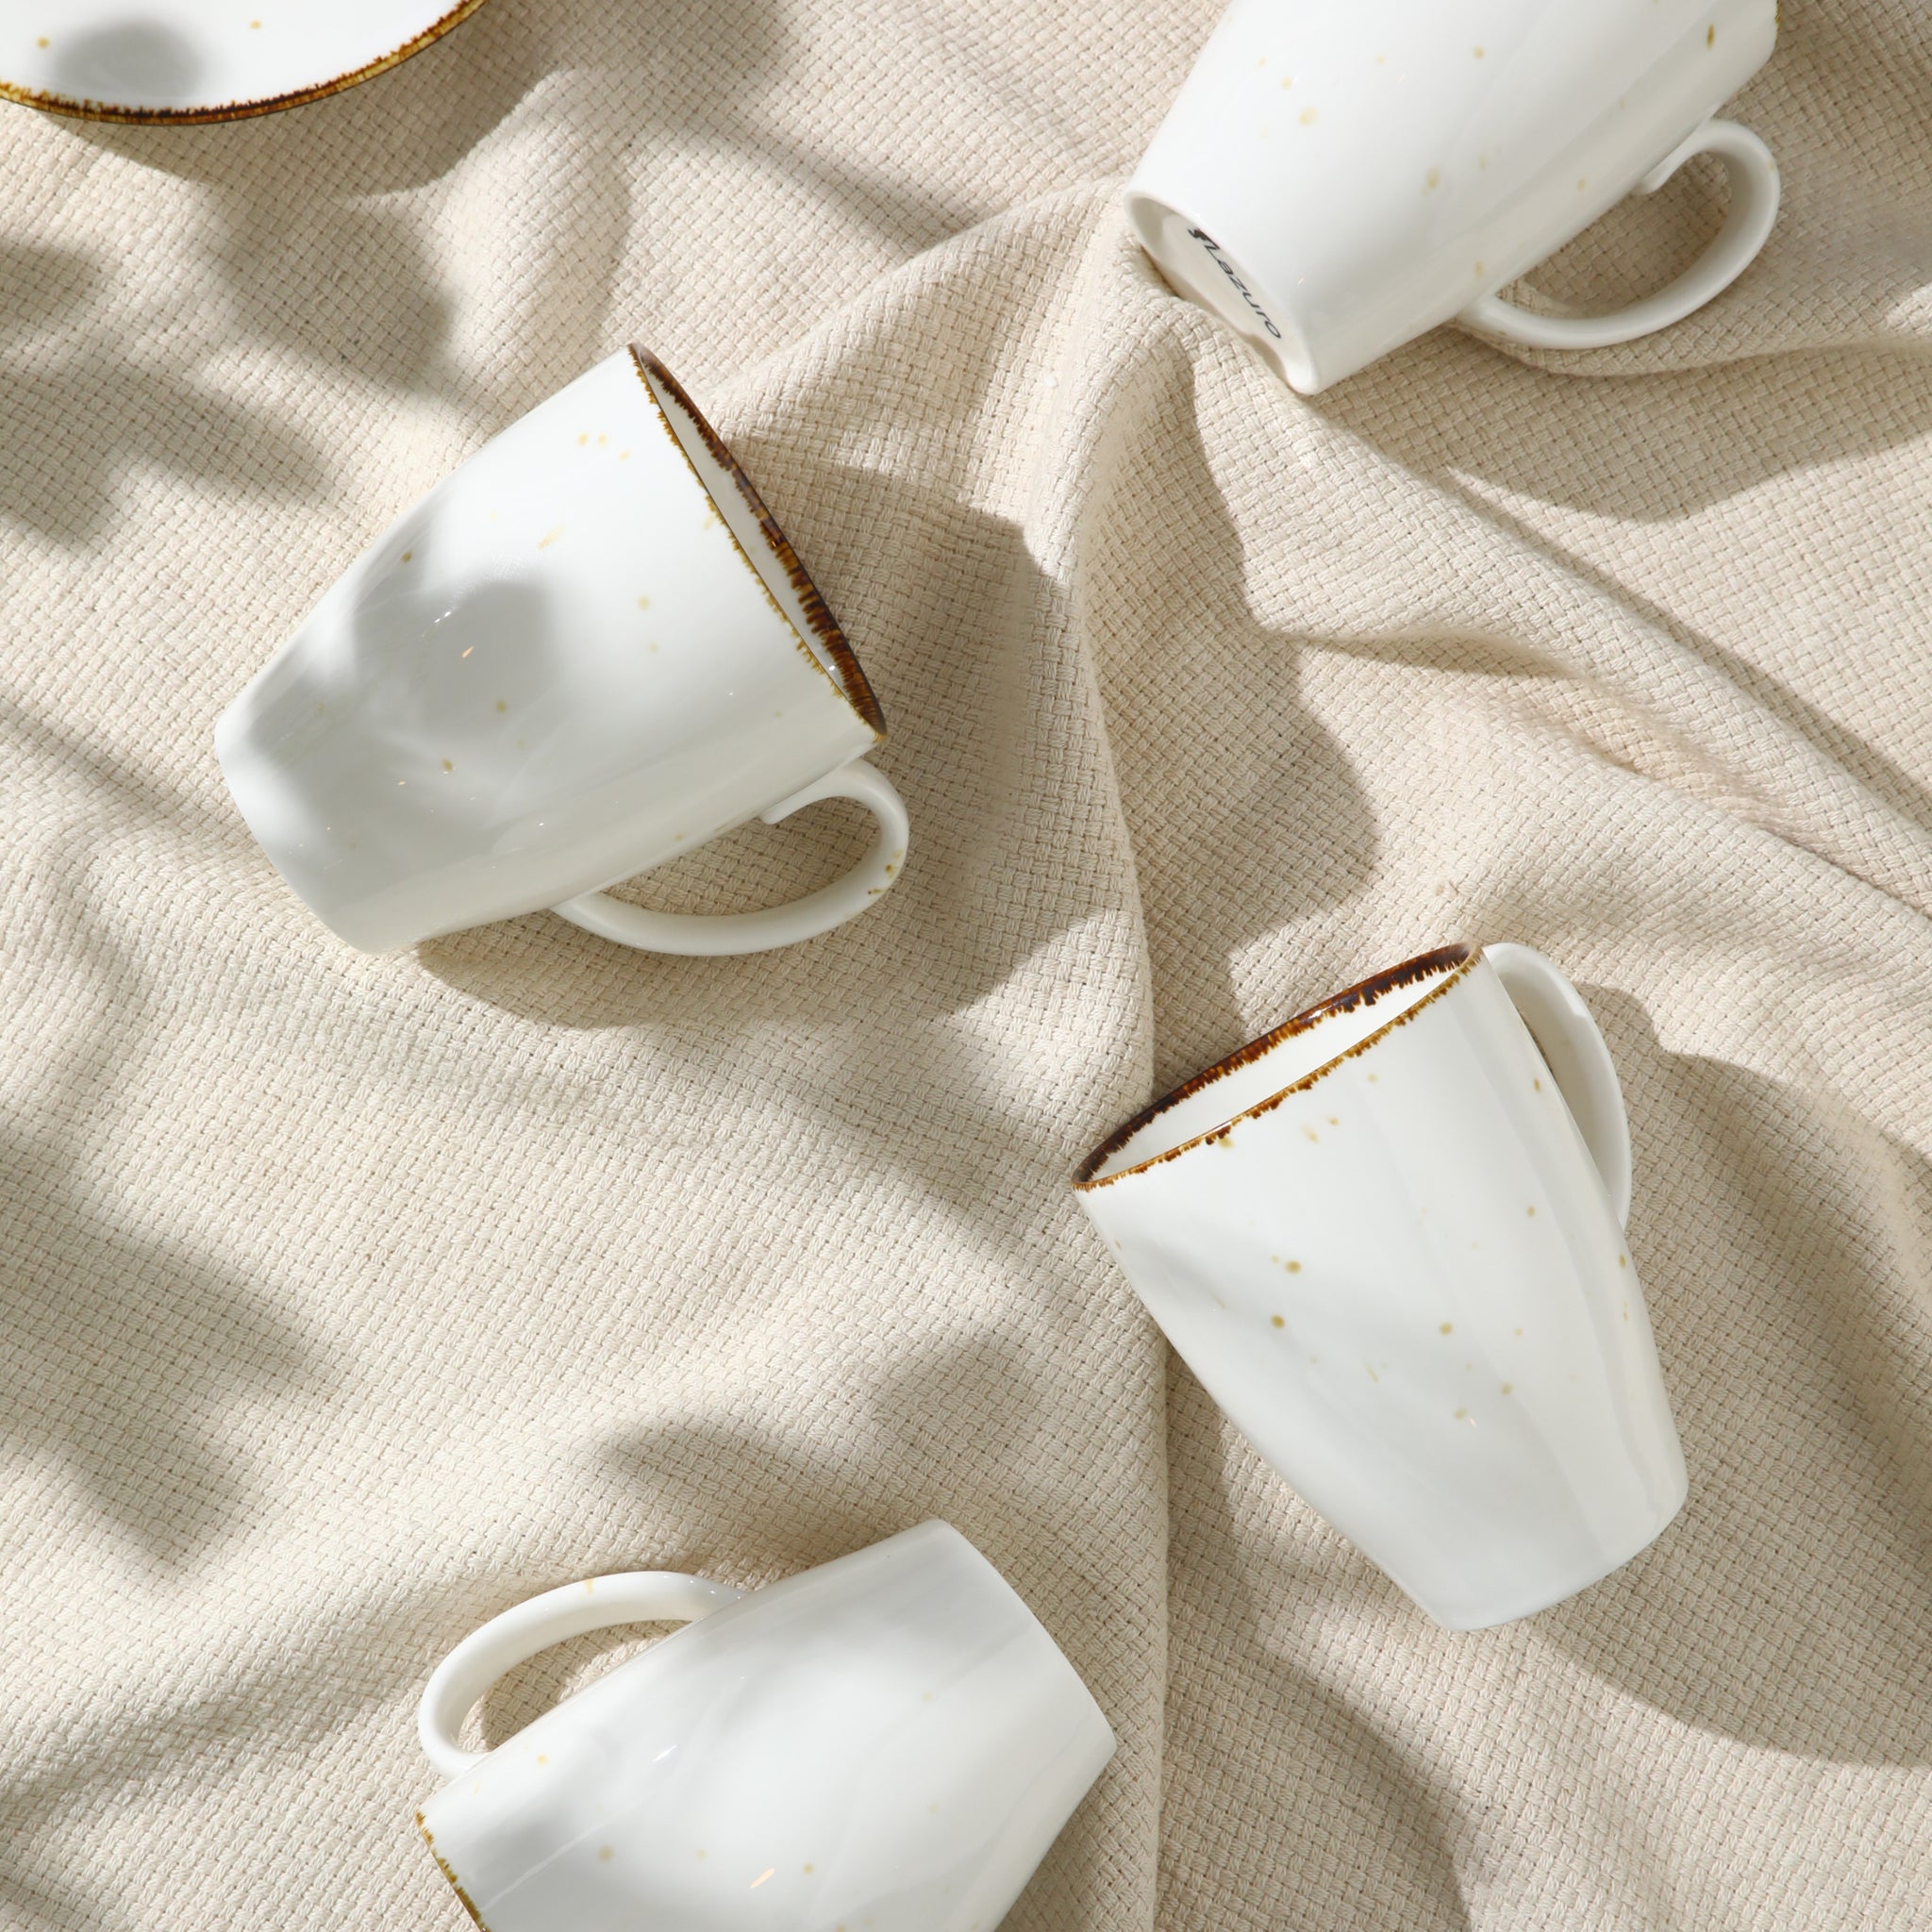 White Pottery Coffee Cups, Cappuccino Coffee Mug, Latte Coffee Cup